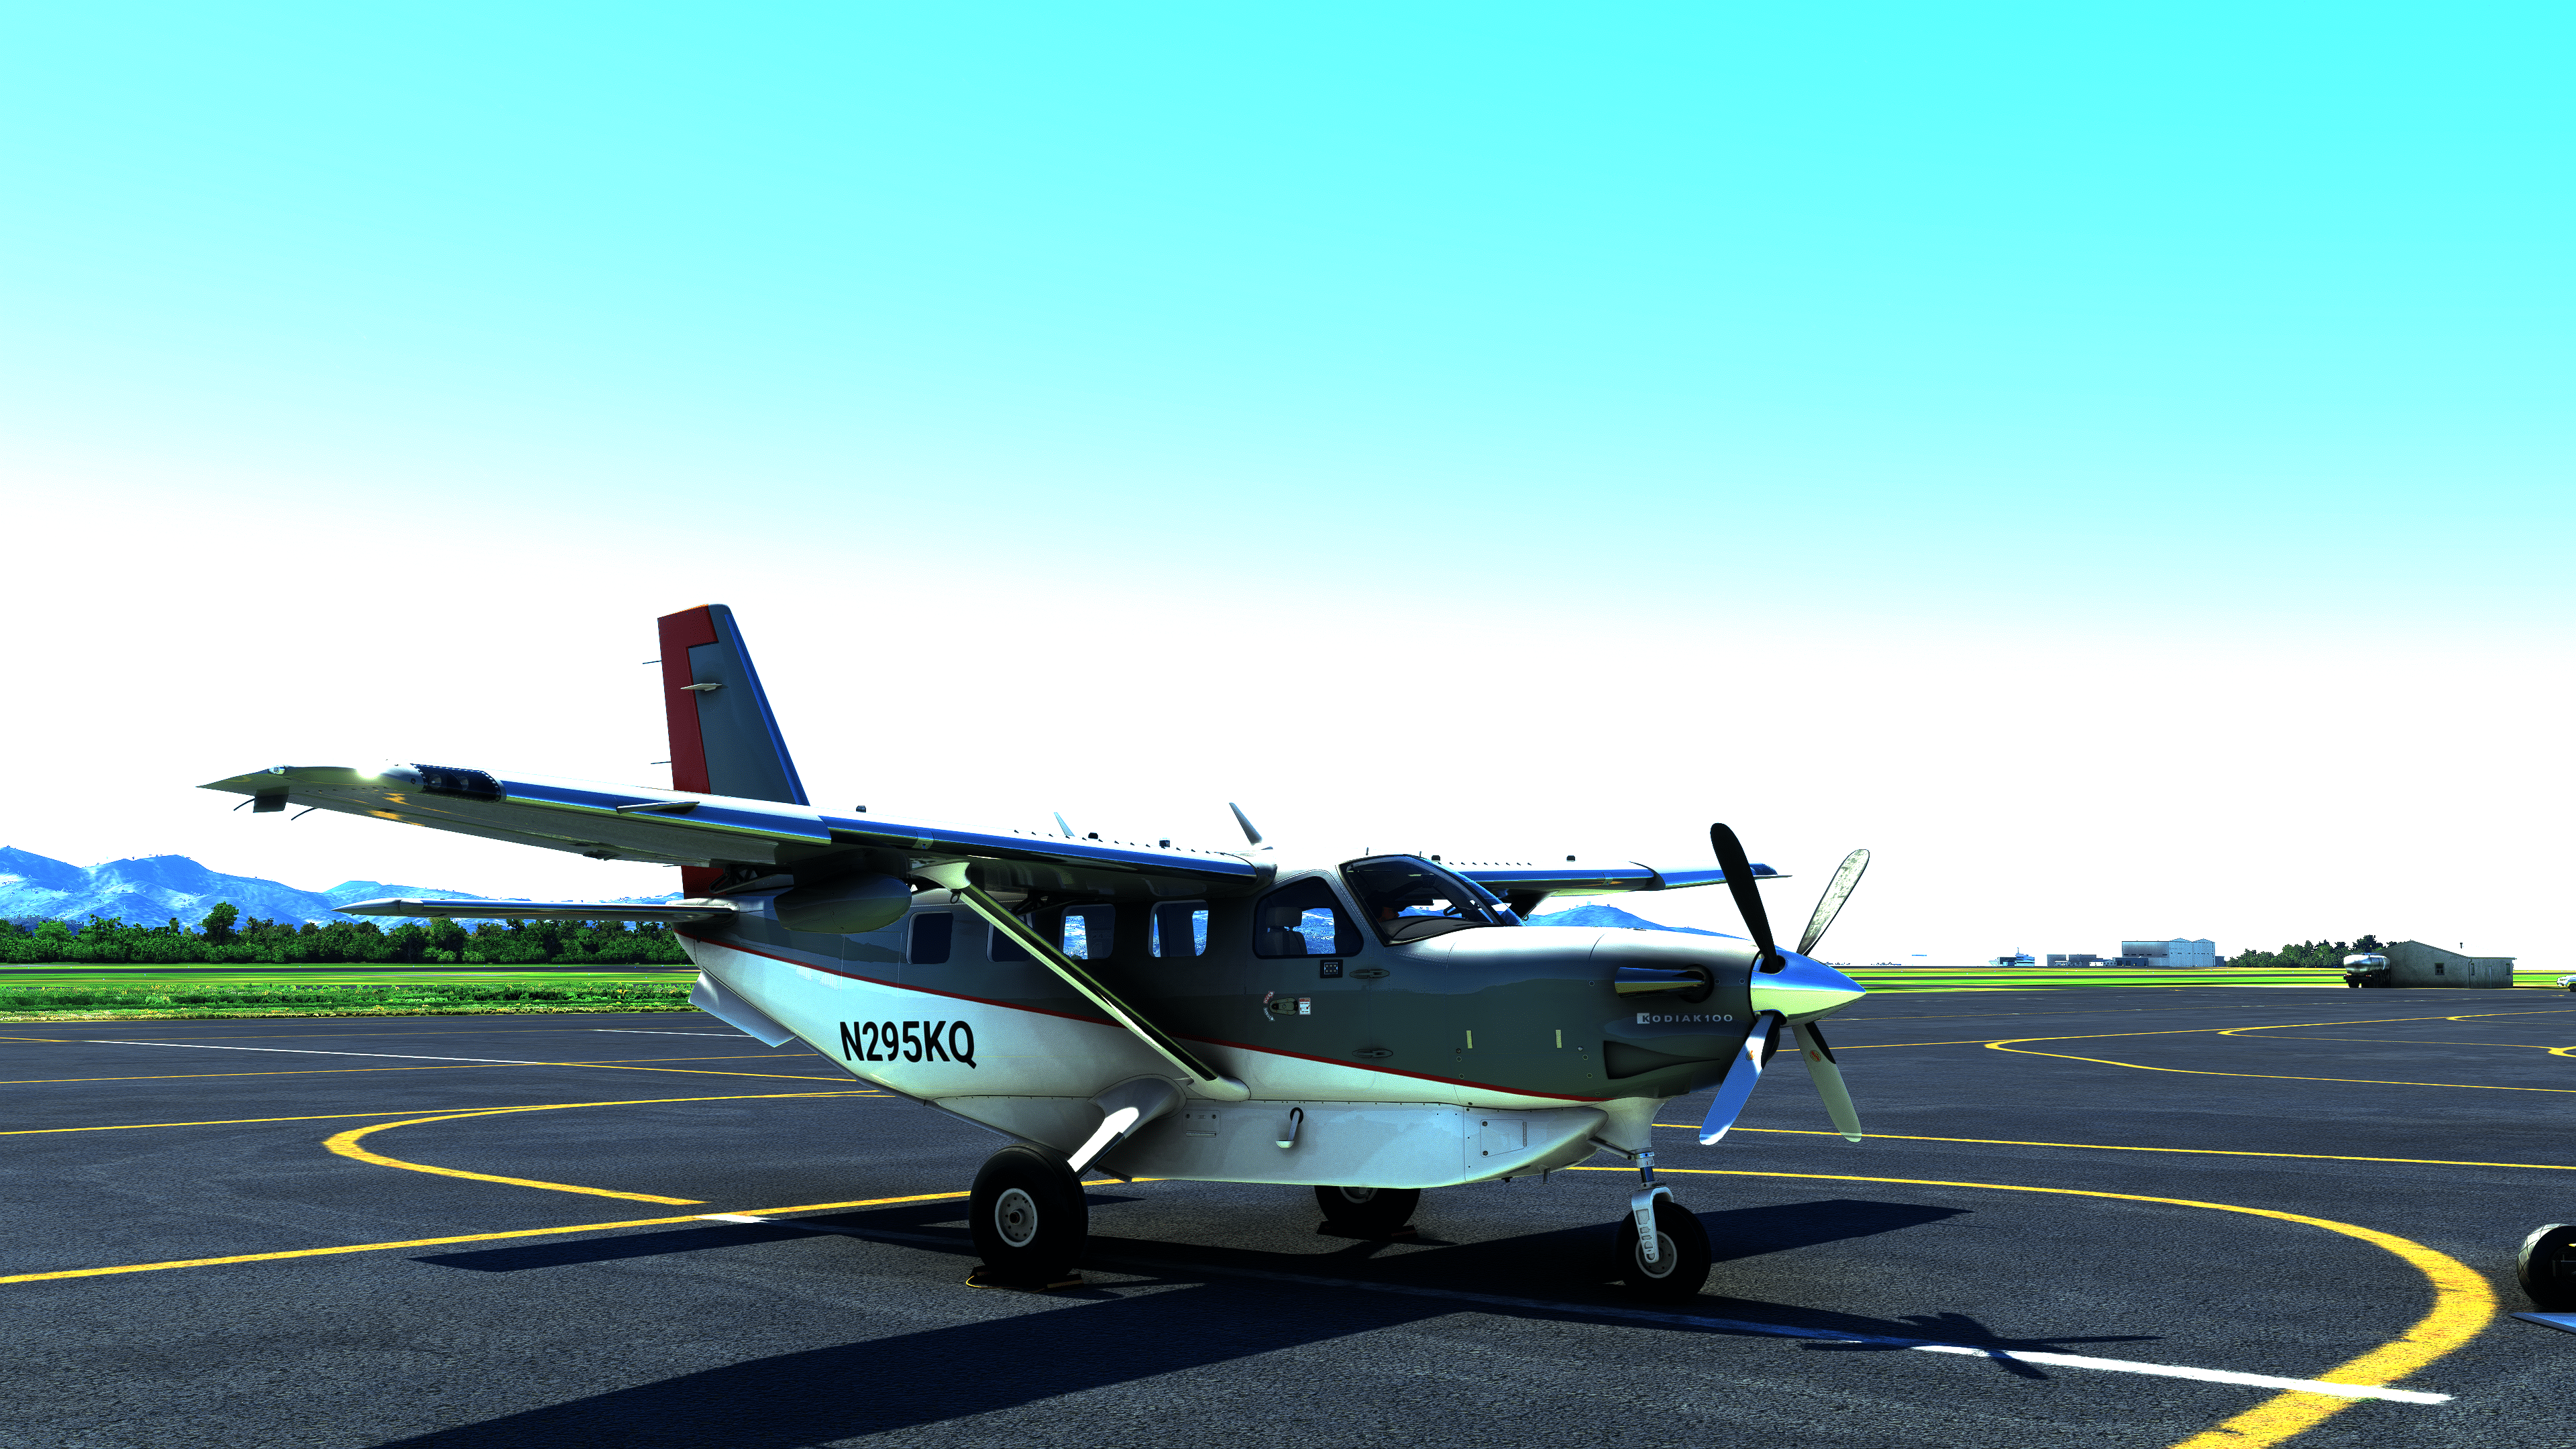 Microsoft Flight Simulator Microsoft Flight Simulator 2020 Flight Aircraft Airplane Airport Caribbea 3840x2160